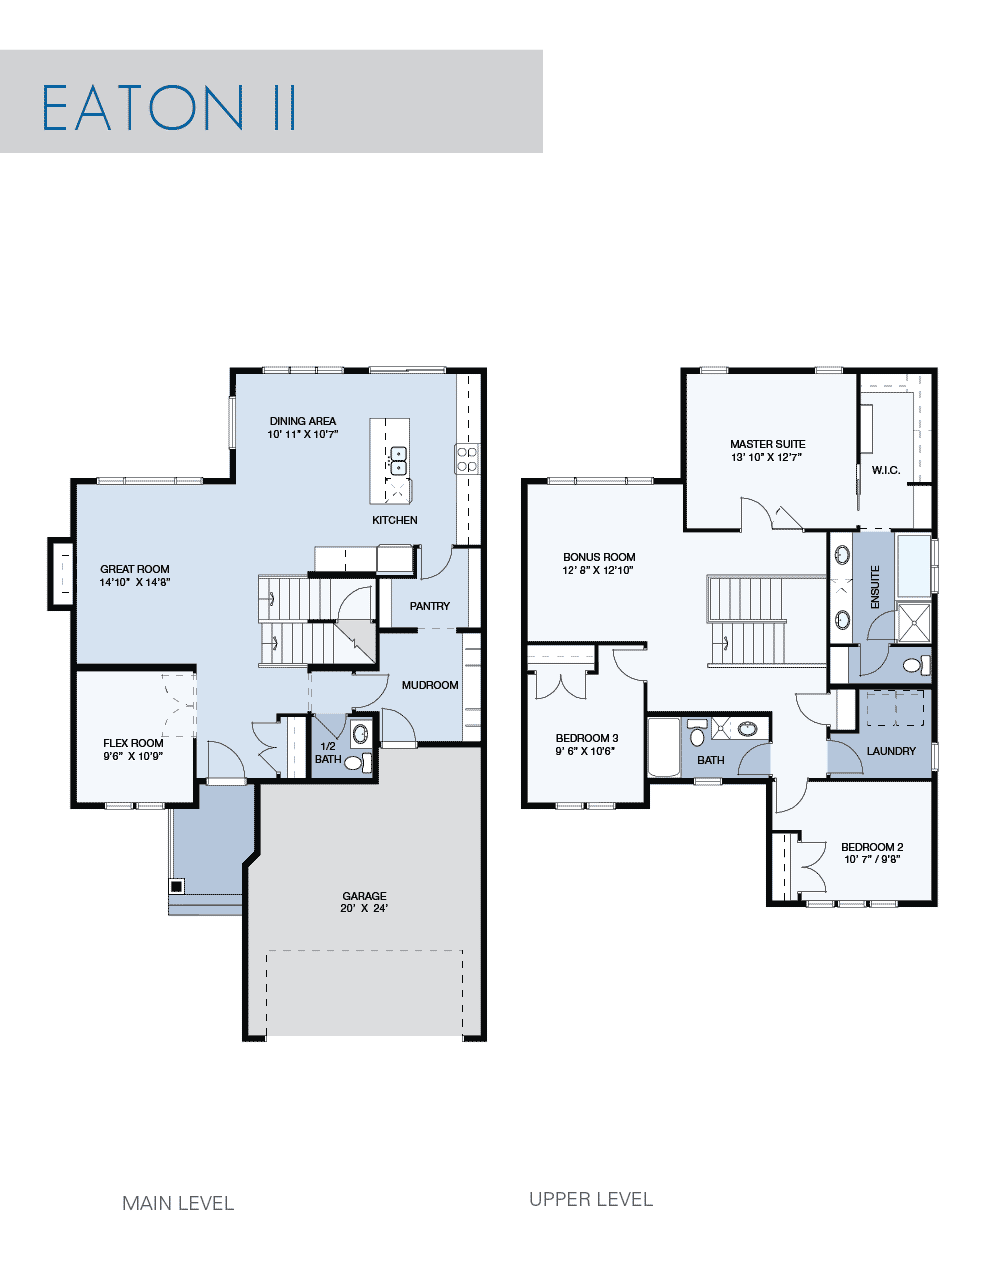 Eaton II Floorplan